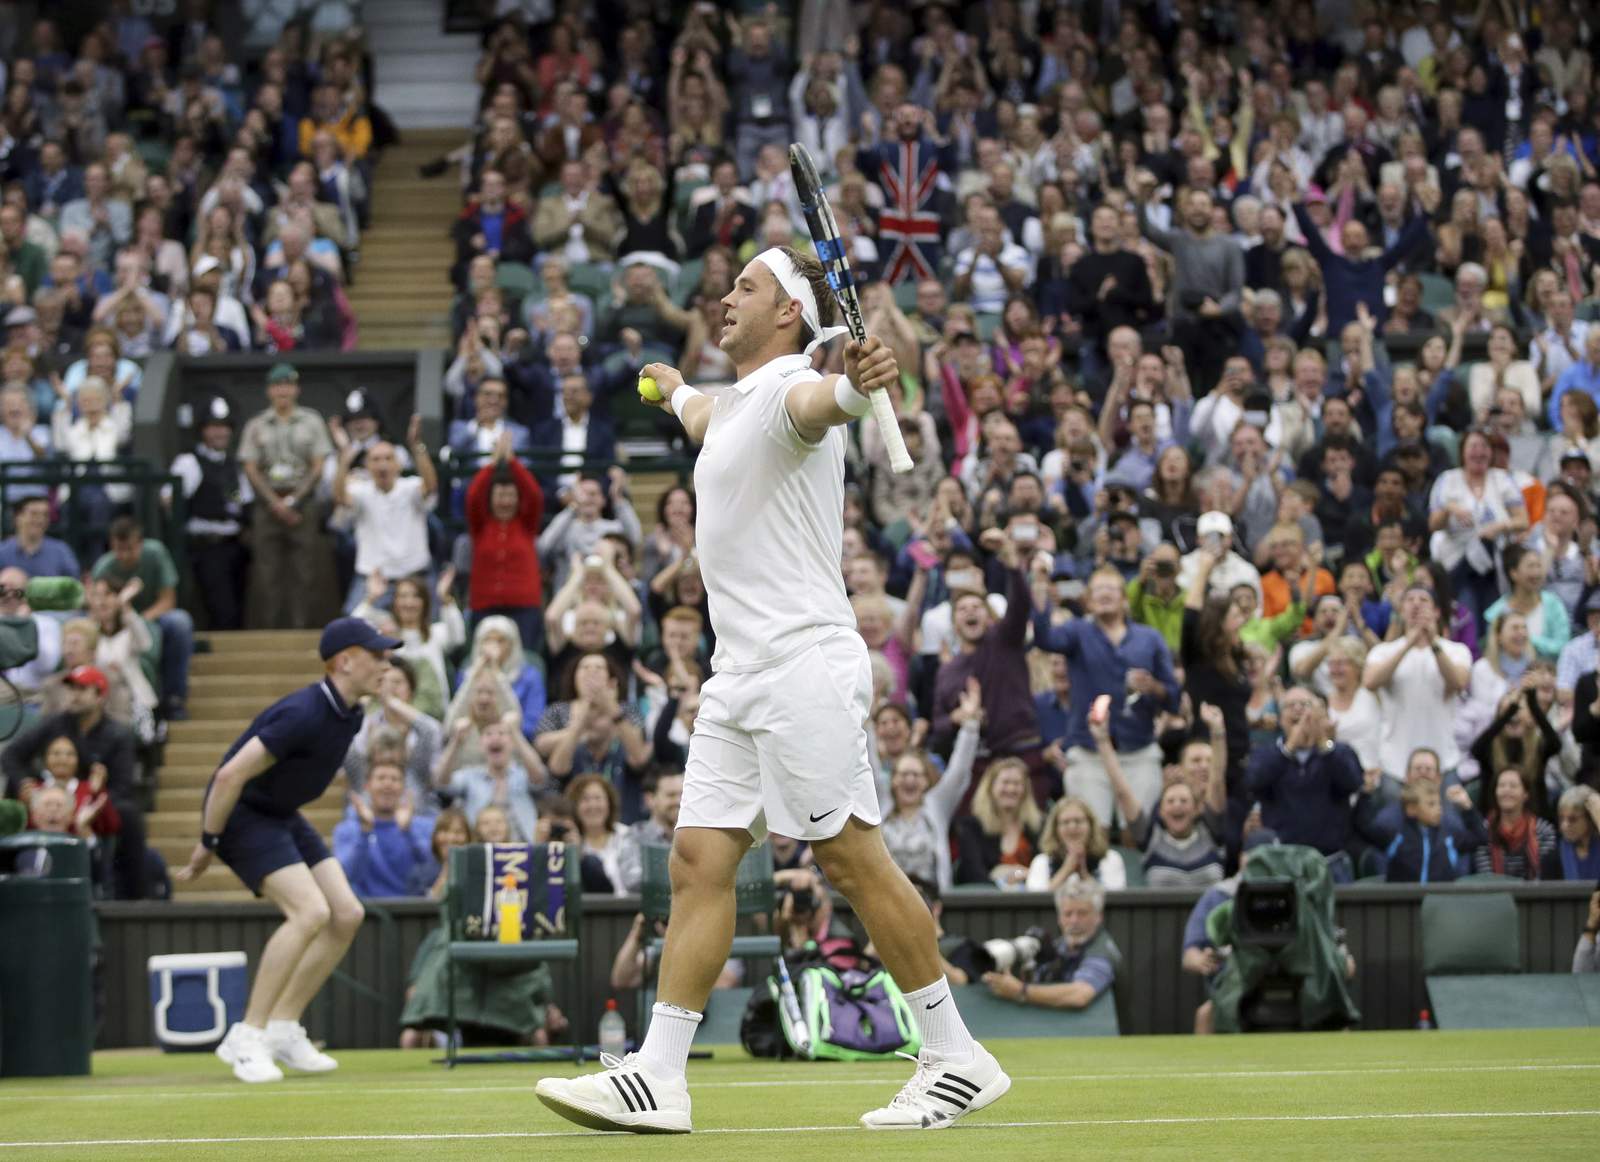 Everyman's everyman, who faced Federer at Wimbledon, retires